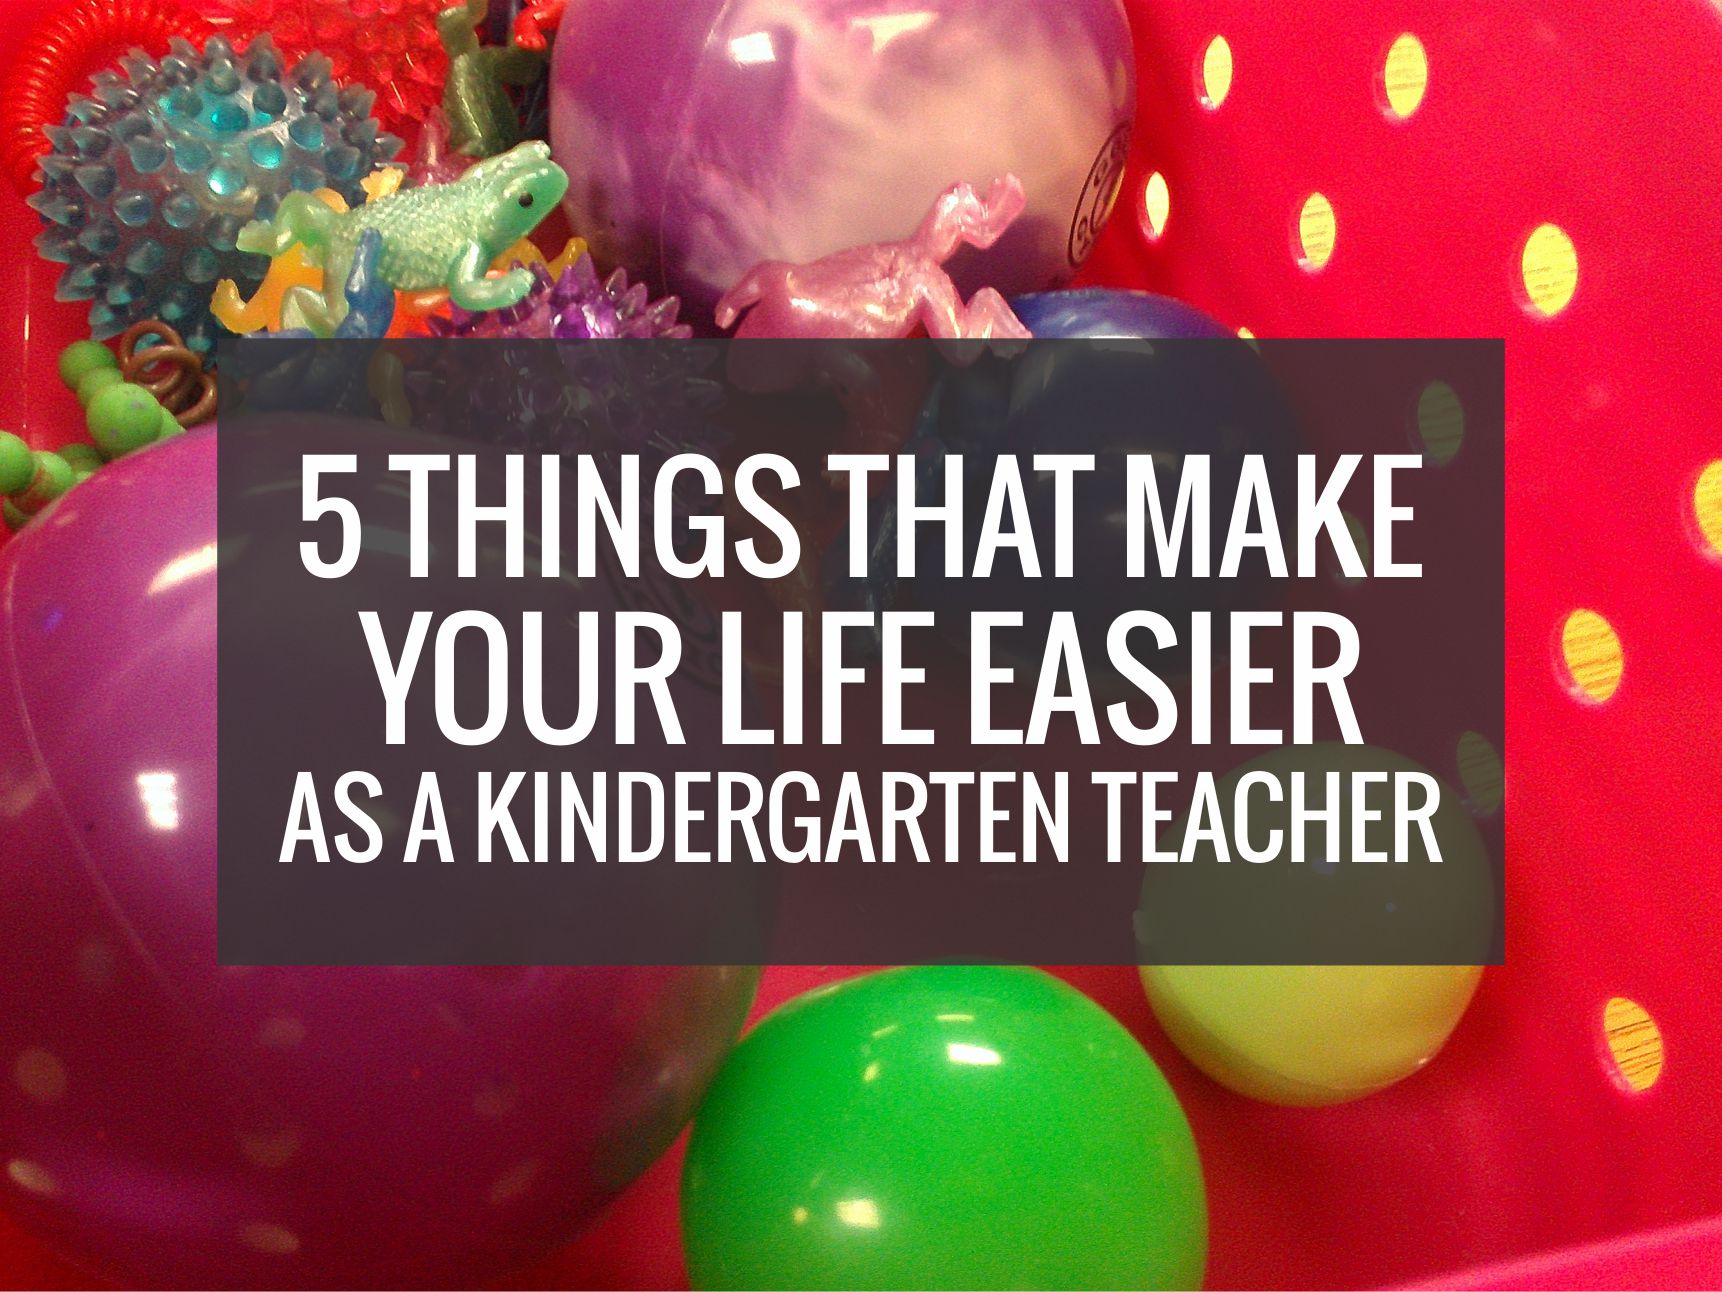 5 Things That Make Your Life Easier as a Kindergarten Teacher